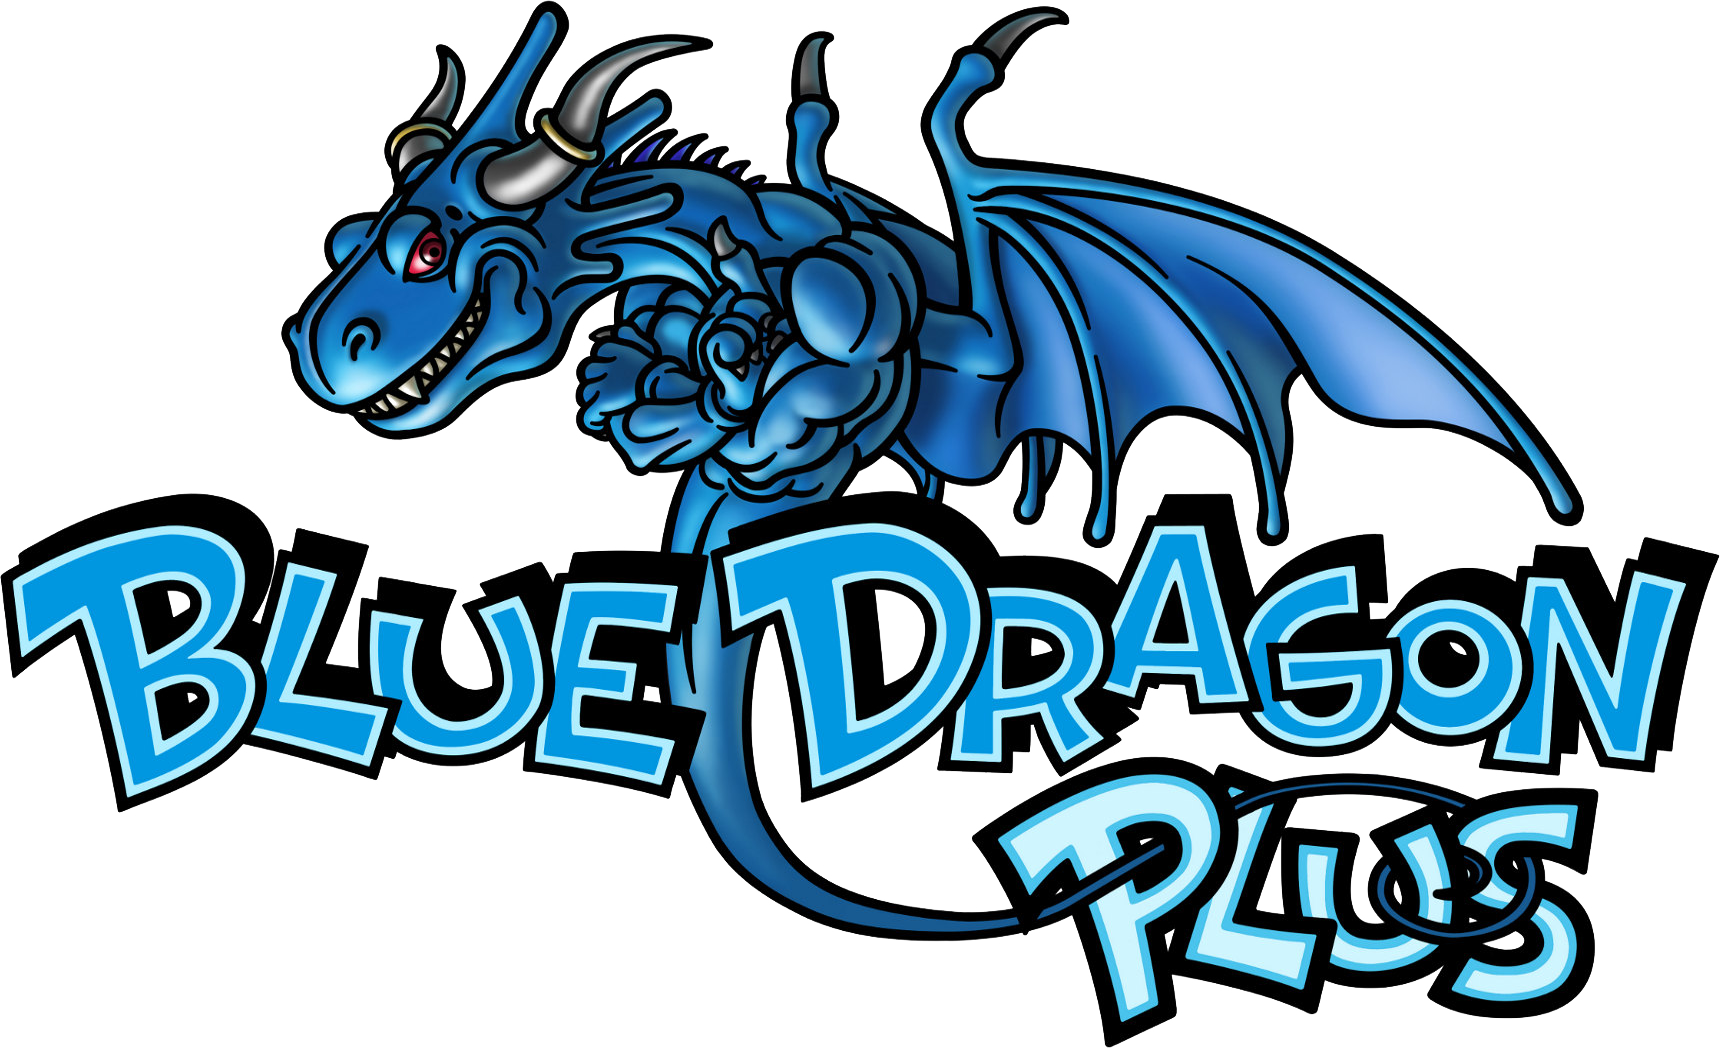 Blue Dragon Mascot Logo by Hassan on Dribbble